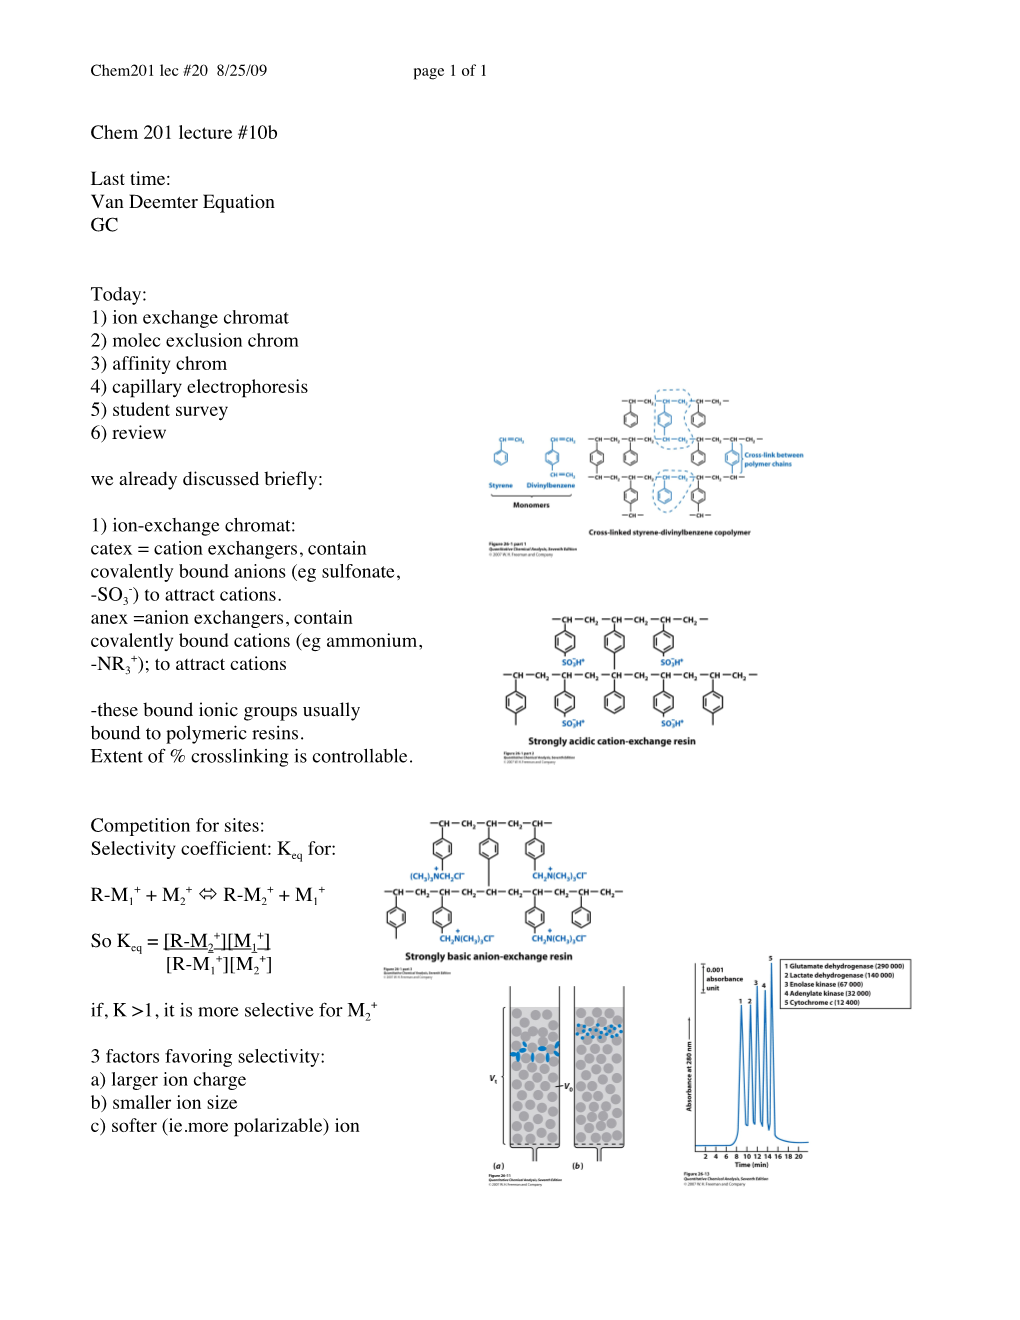 Chem 201 Lecture #10B Last Time: Van Deemter Equation GC Today